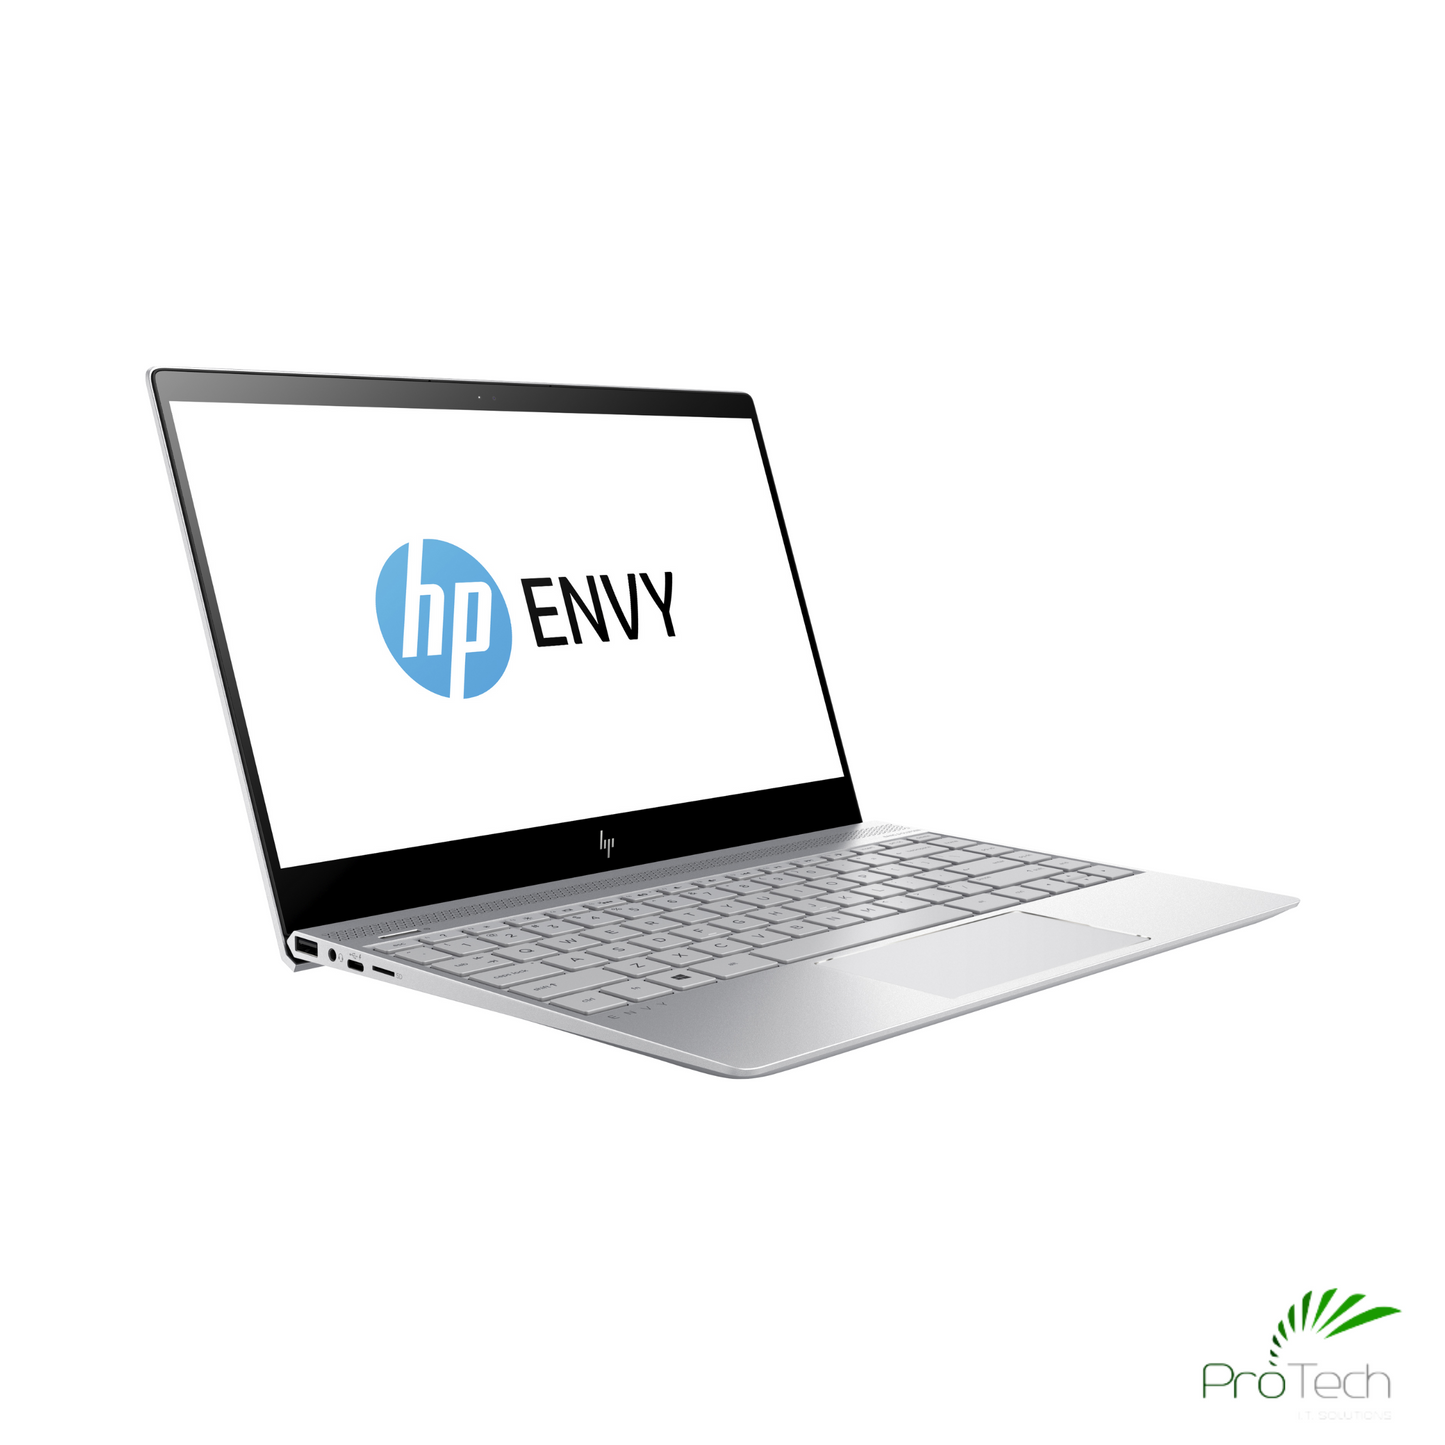 HP Envy 13-ad141tu 13” Touchscreen | Core i5 | 8GB RAM | 128GB SSD ProTech I.T. Solutions